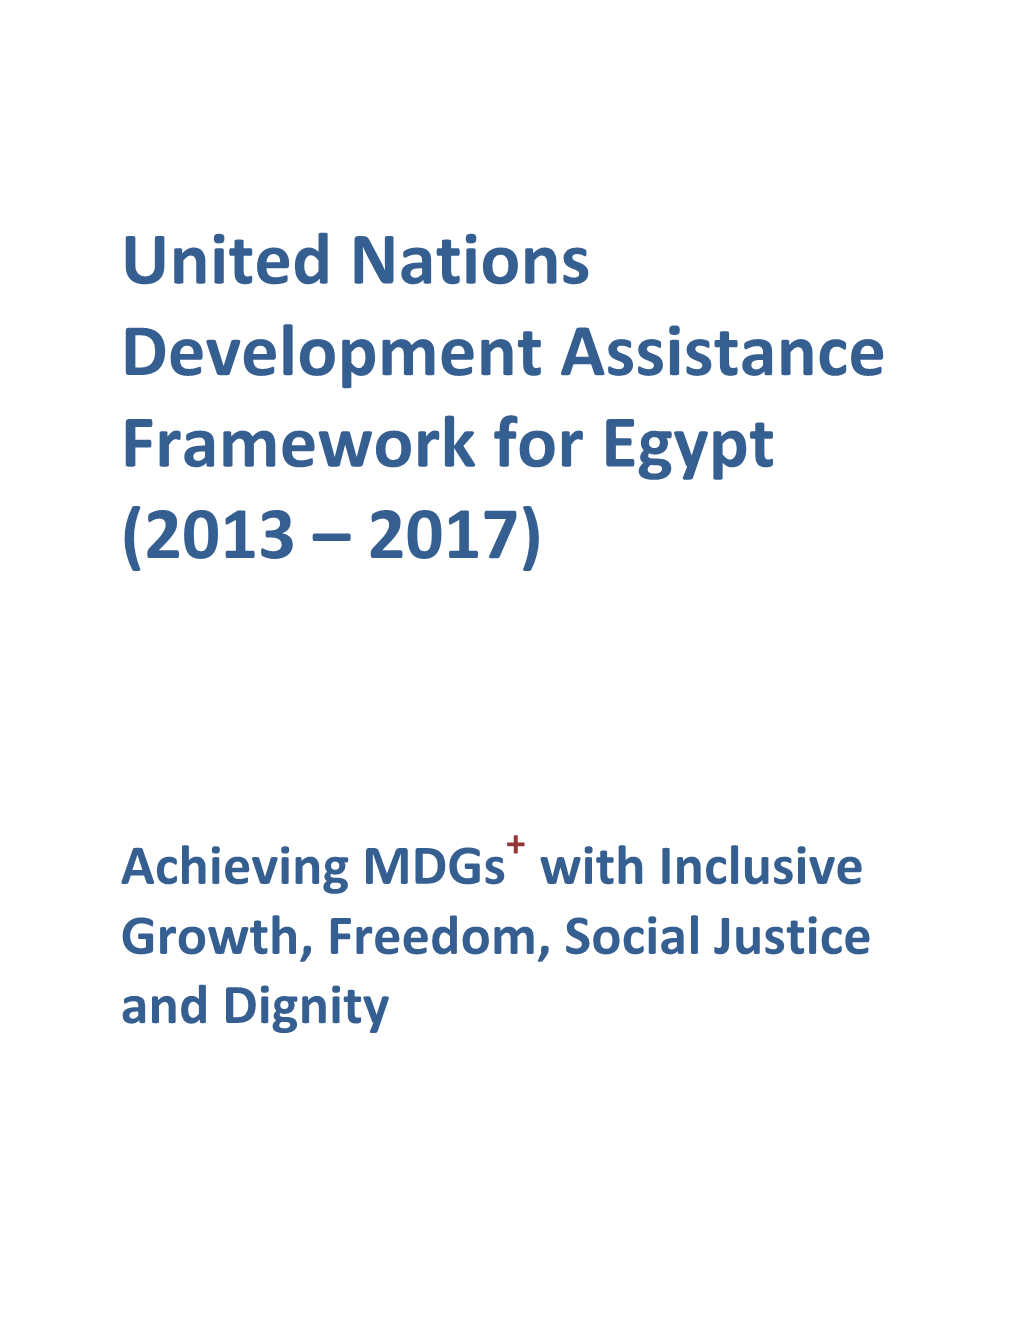 United Nations Development Assistance Framework for Egypt (2013 – 2017)